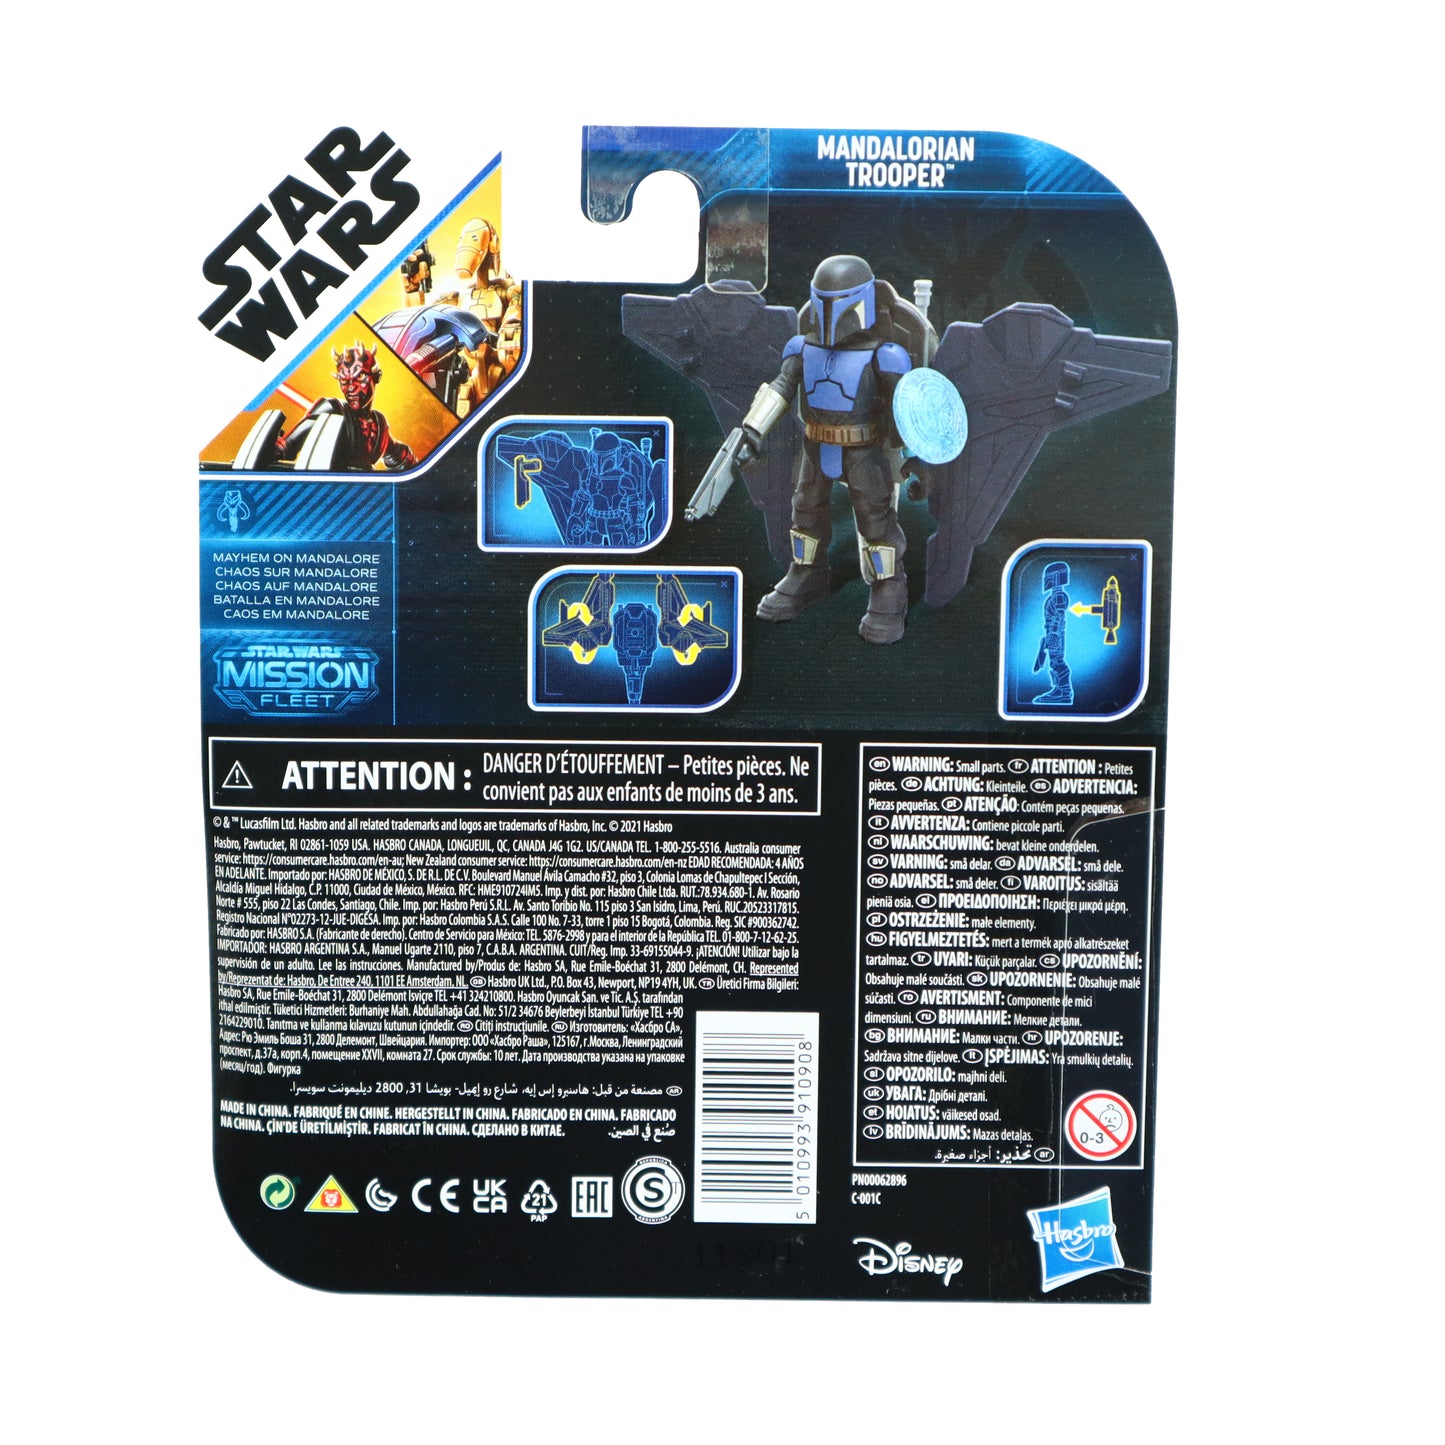 Star Wars Mission Fleet: Mandalorian Trooper w/ Jetpack Miniature Action Figure Set